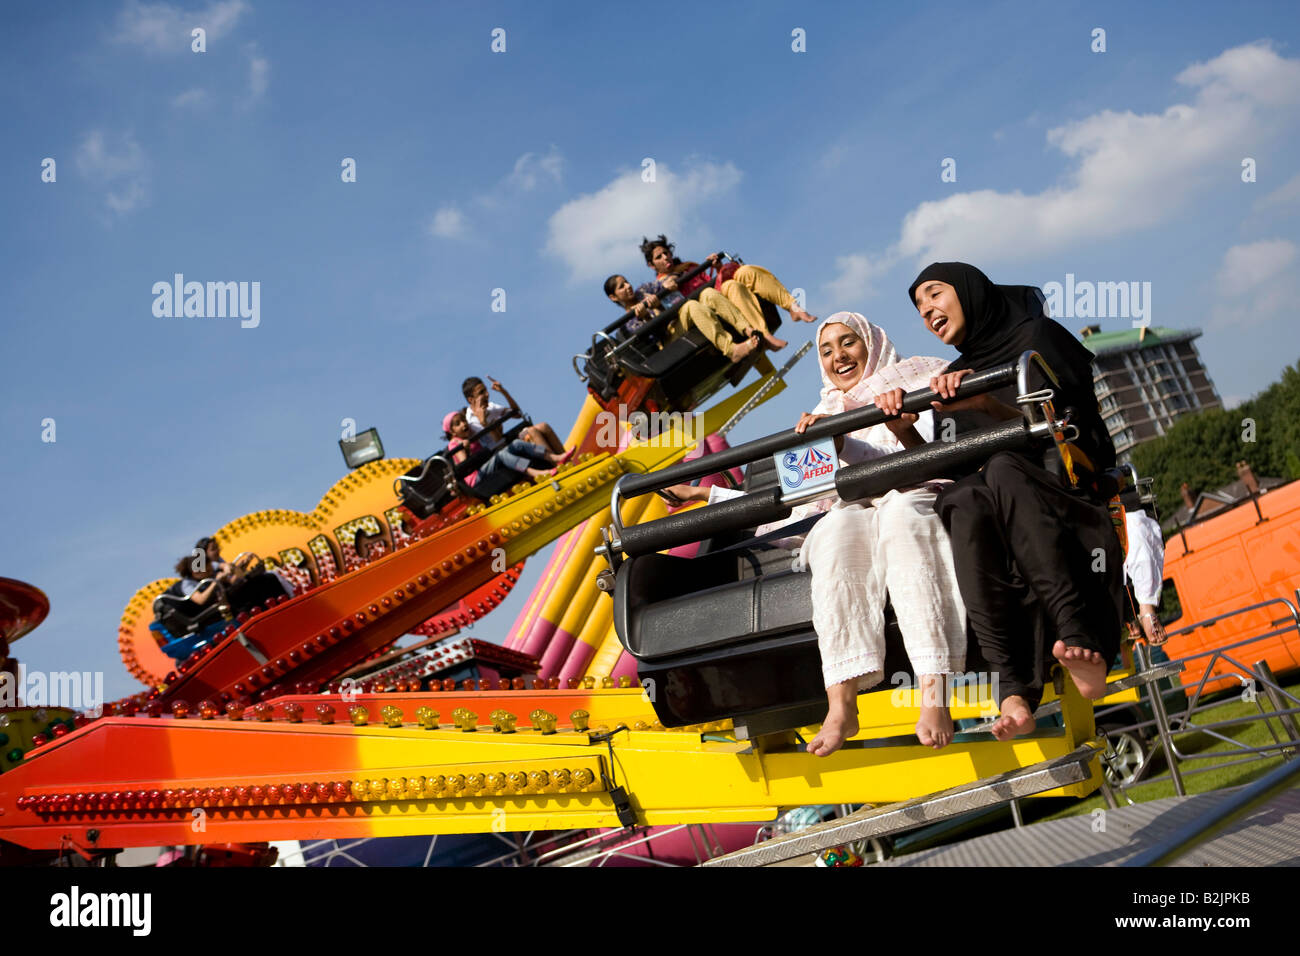 UK England Manchester Platt Fields Mega Mela hijab wearing moslem women on Mexican wave fairground ride Stock Photo